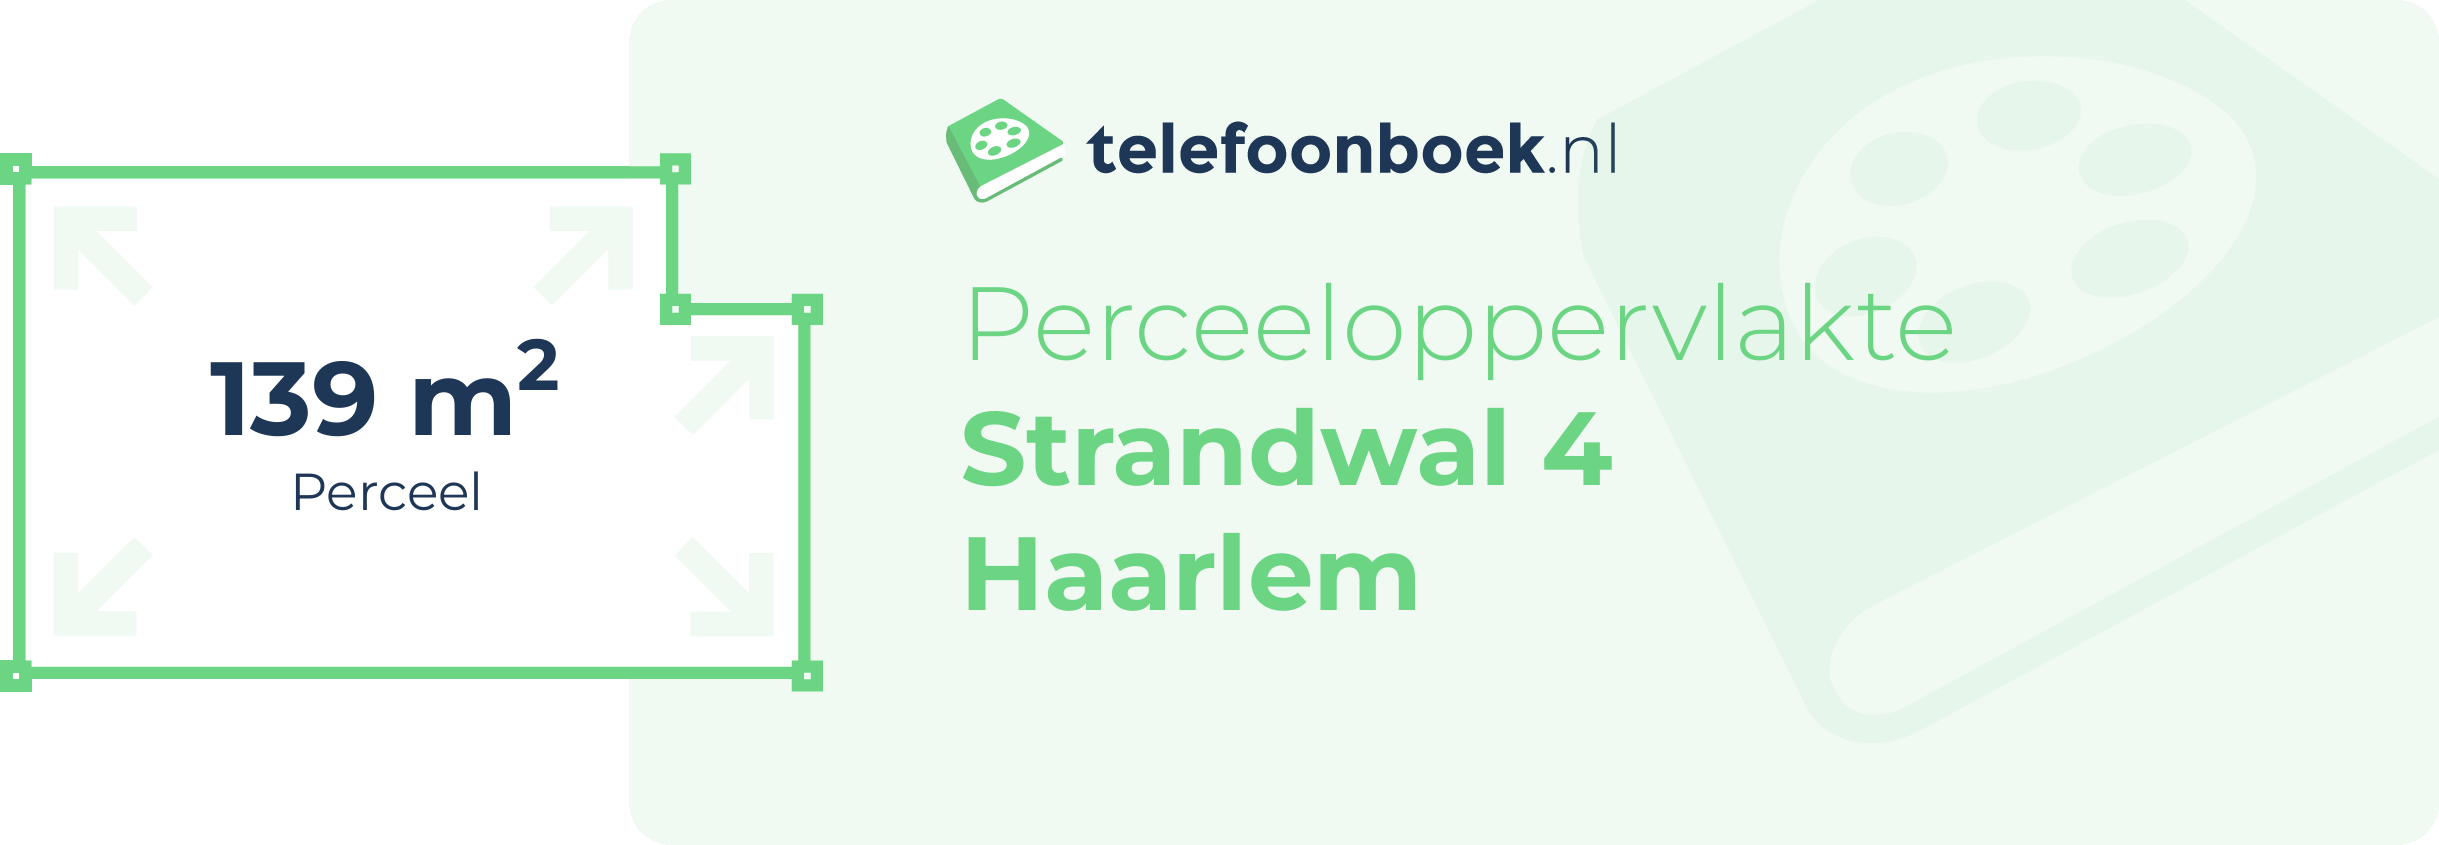 Perceeloppervlakte Strandwal 4 Haarlem